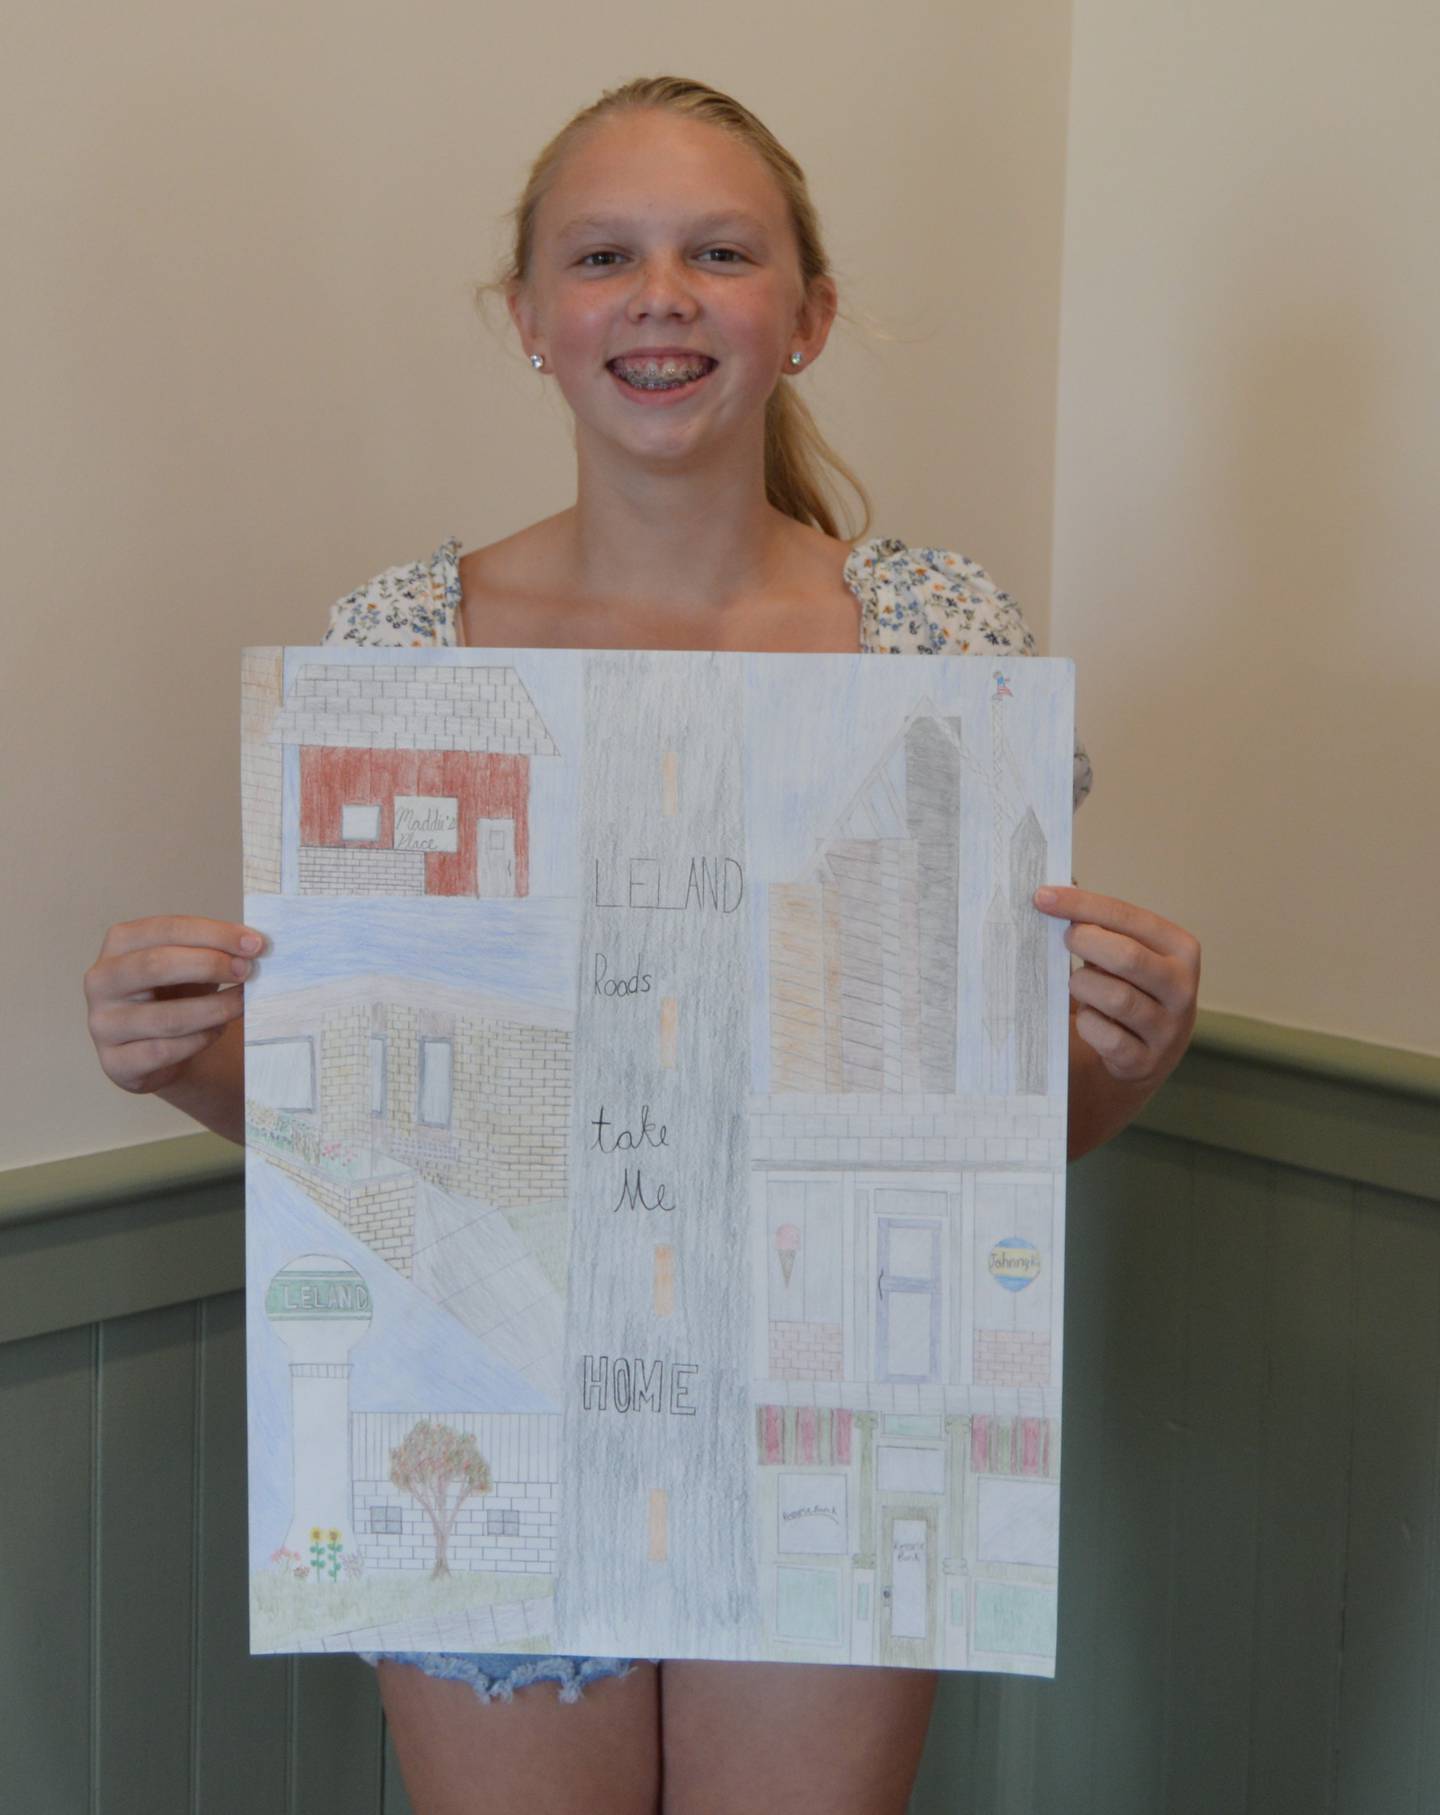 Macey Kinney, eight grader of Leland Middle School, displays her winning entry.